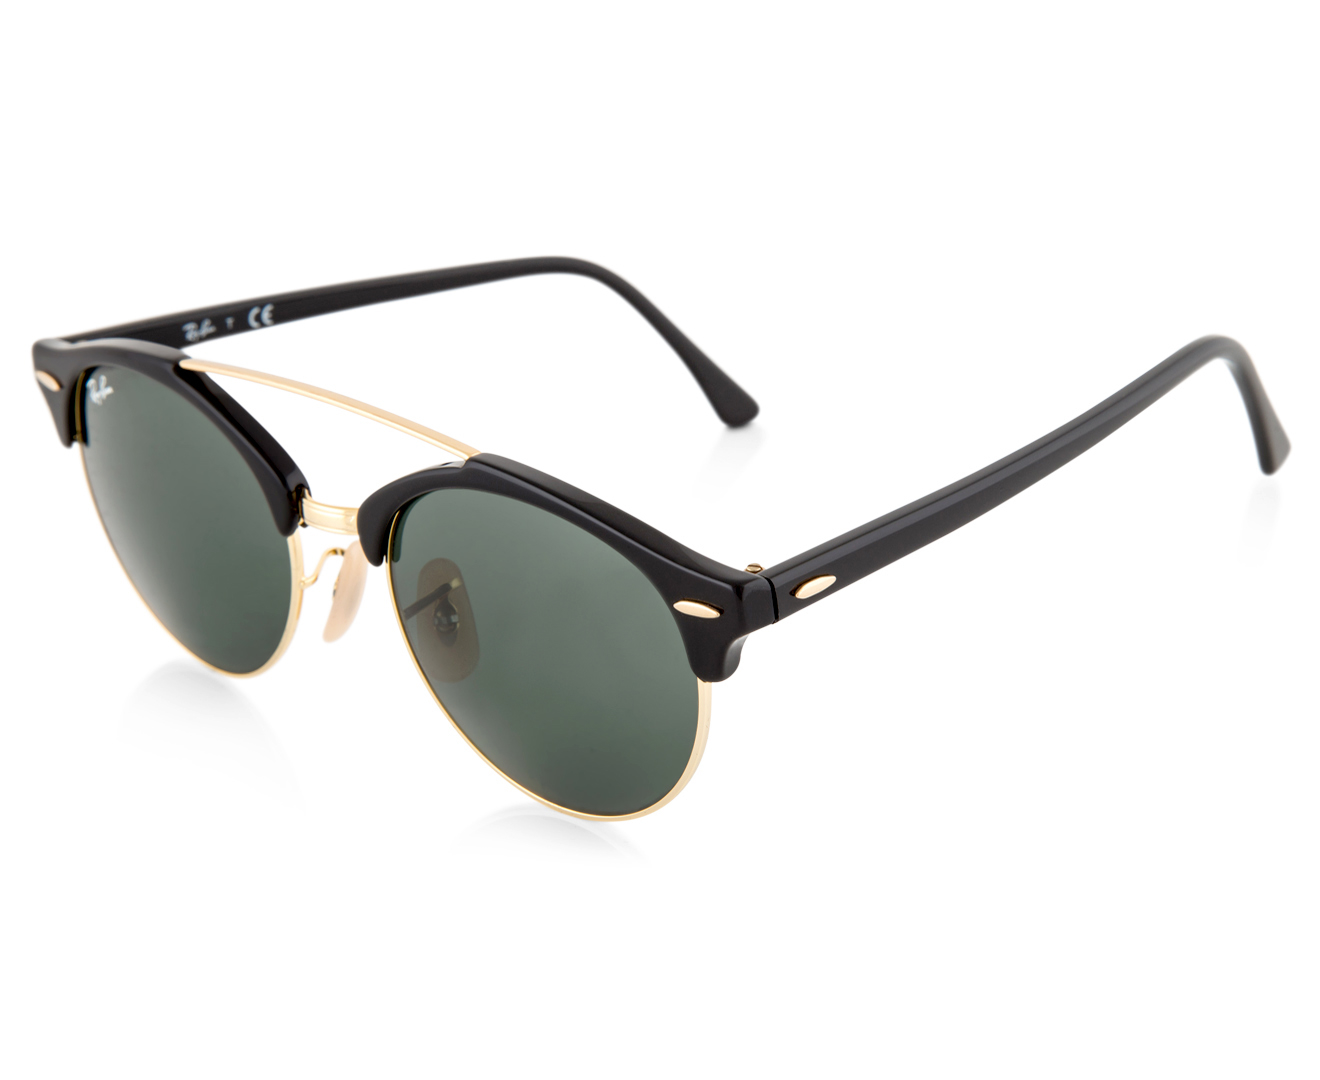 Ray-Ban Clubround 4346 Sunglasses - Black/Green | Catch.co.nz